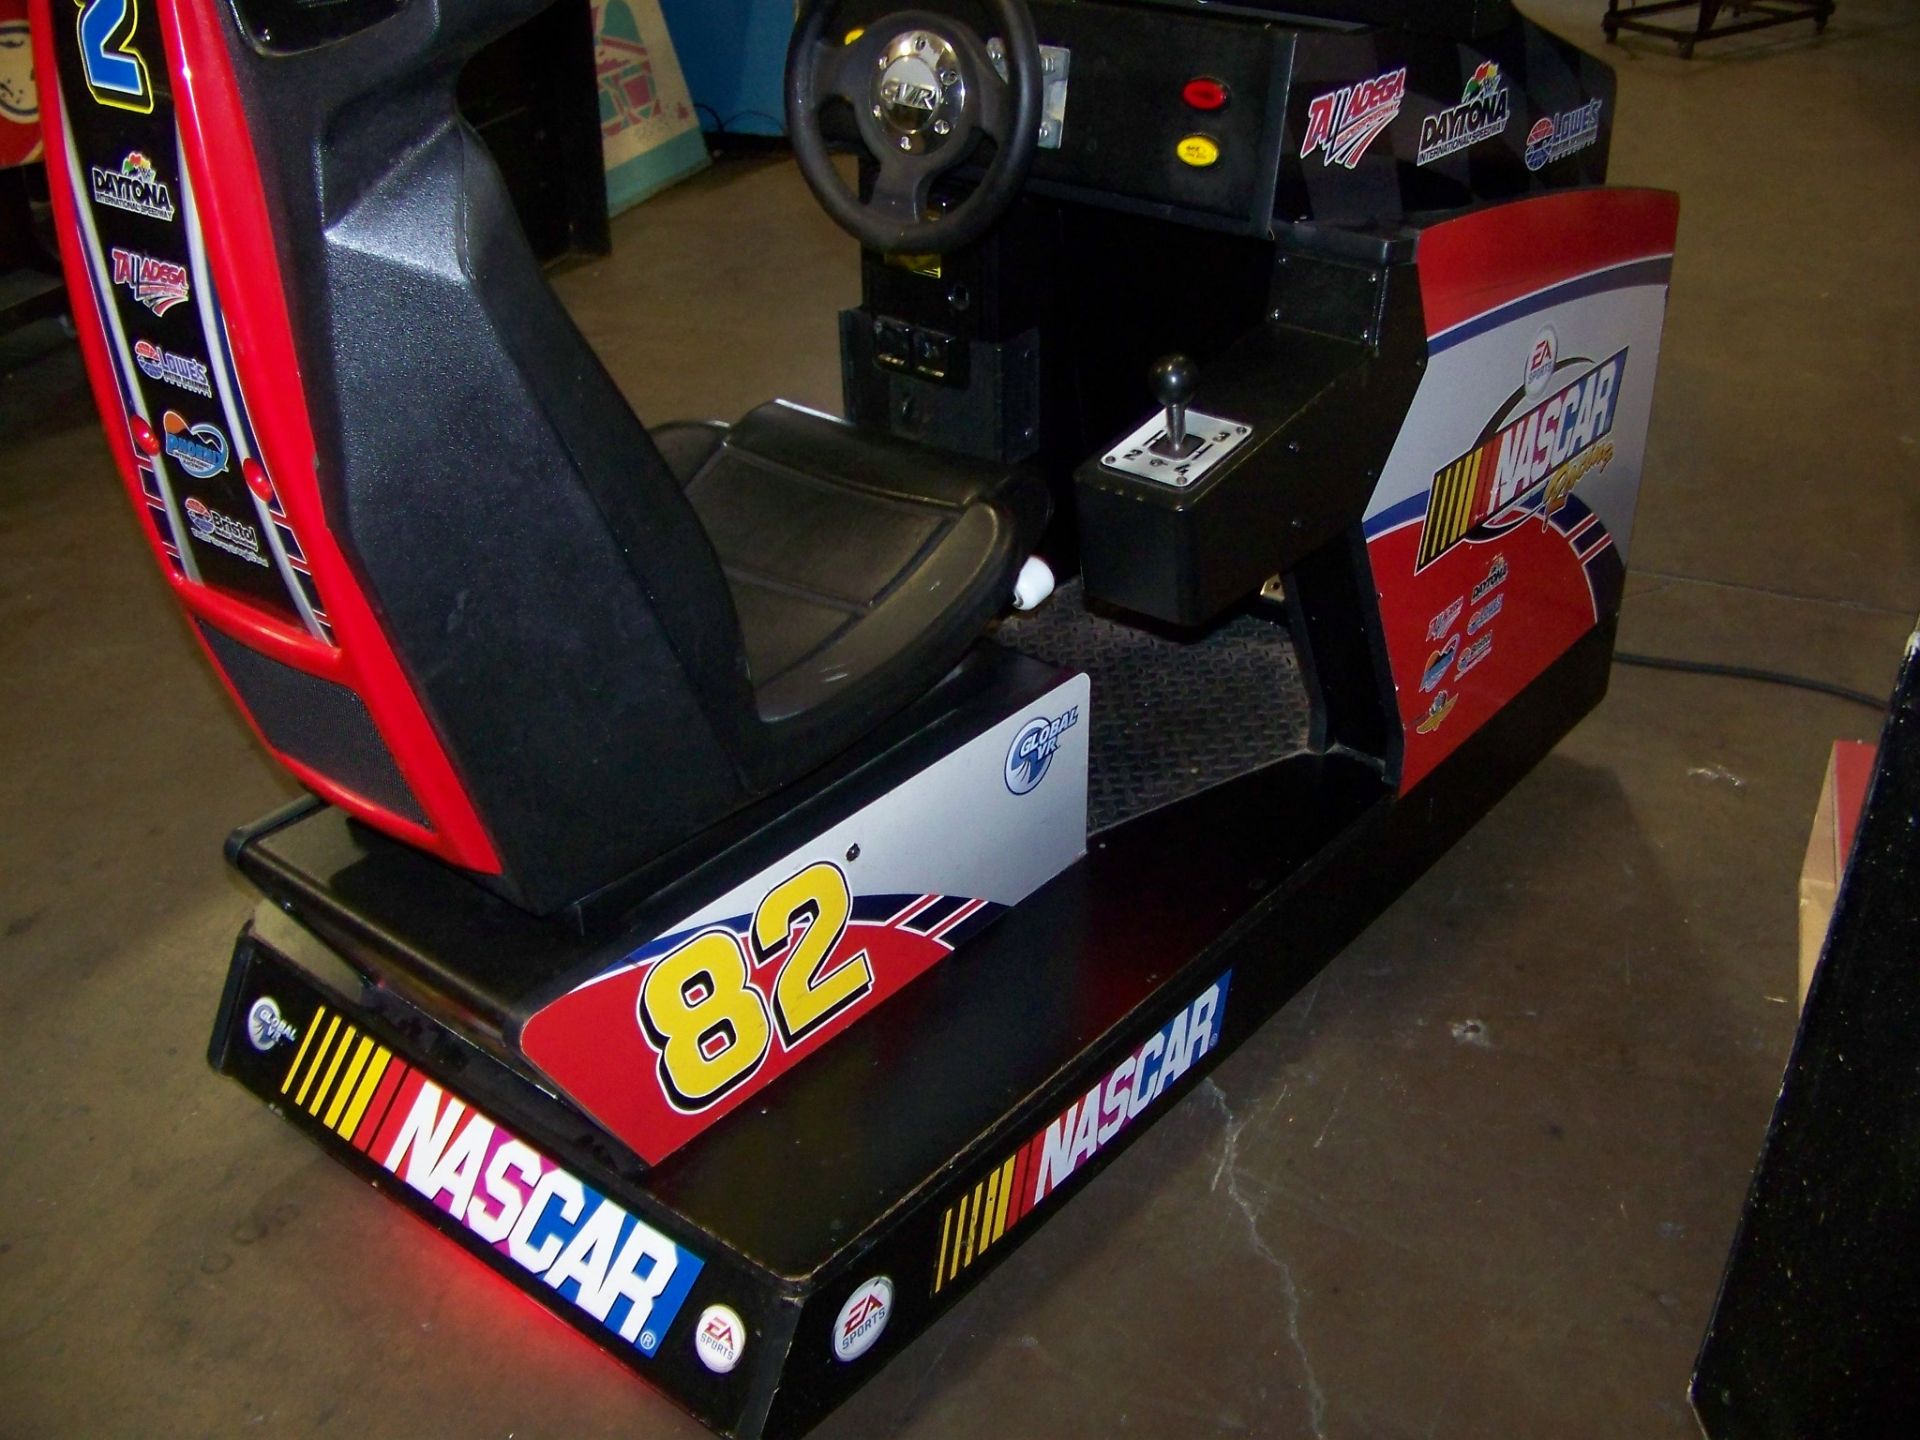 NASCAR RACING ARCADE GAME 32" LCD GLOBAL VR - Image 5 of 7